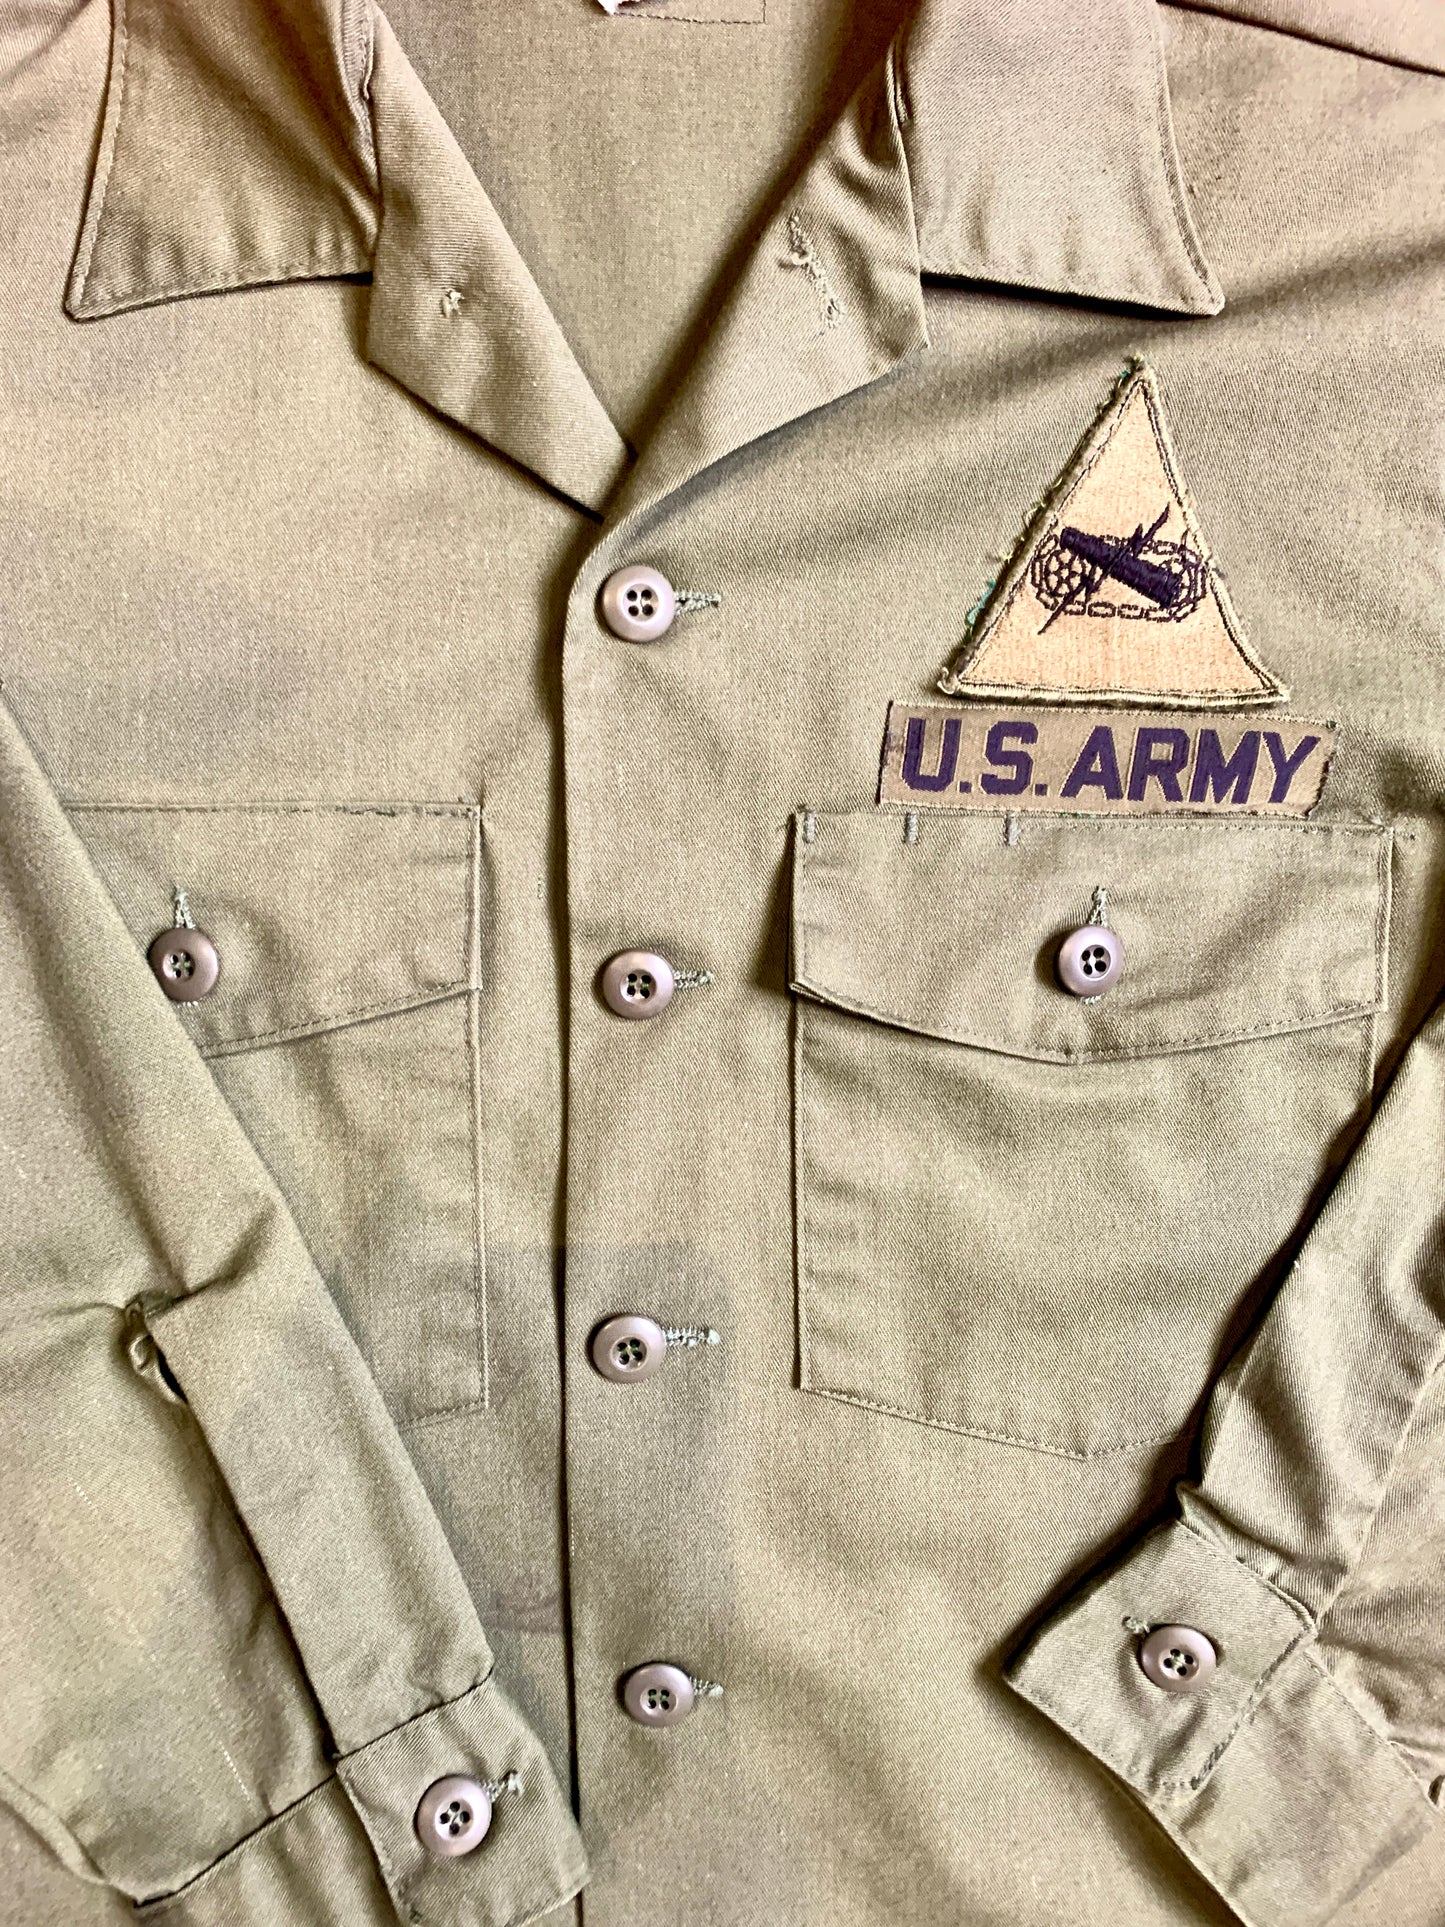 US Army OG107 Shirt